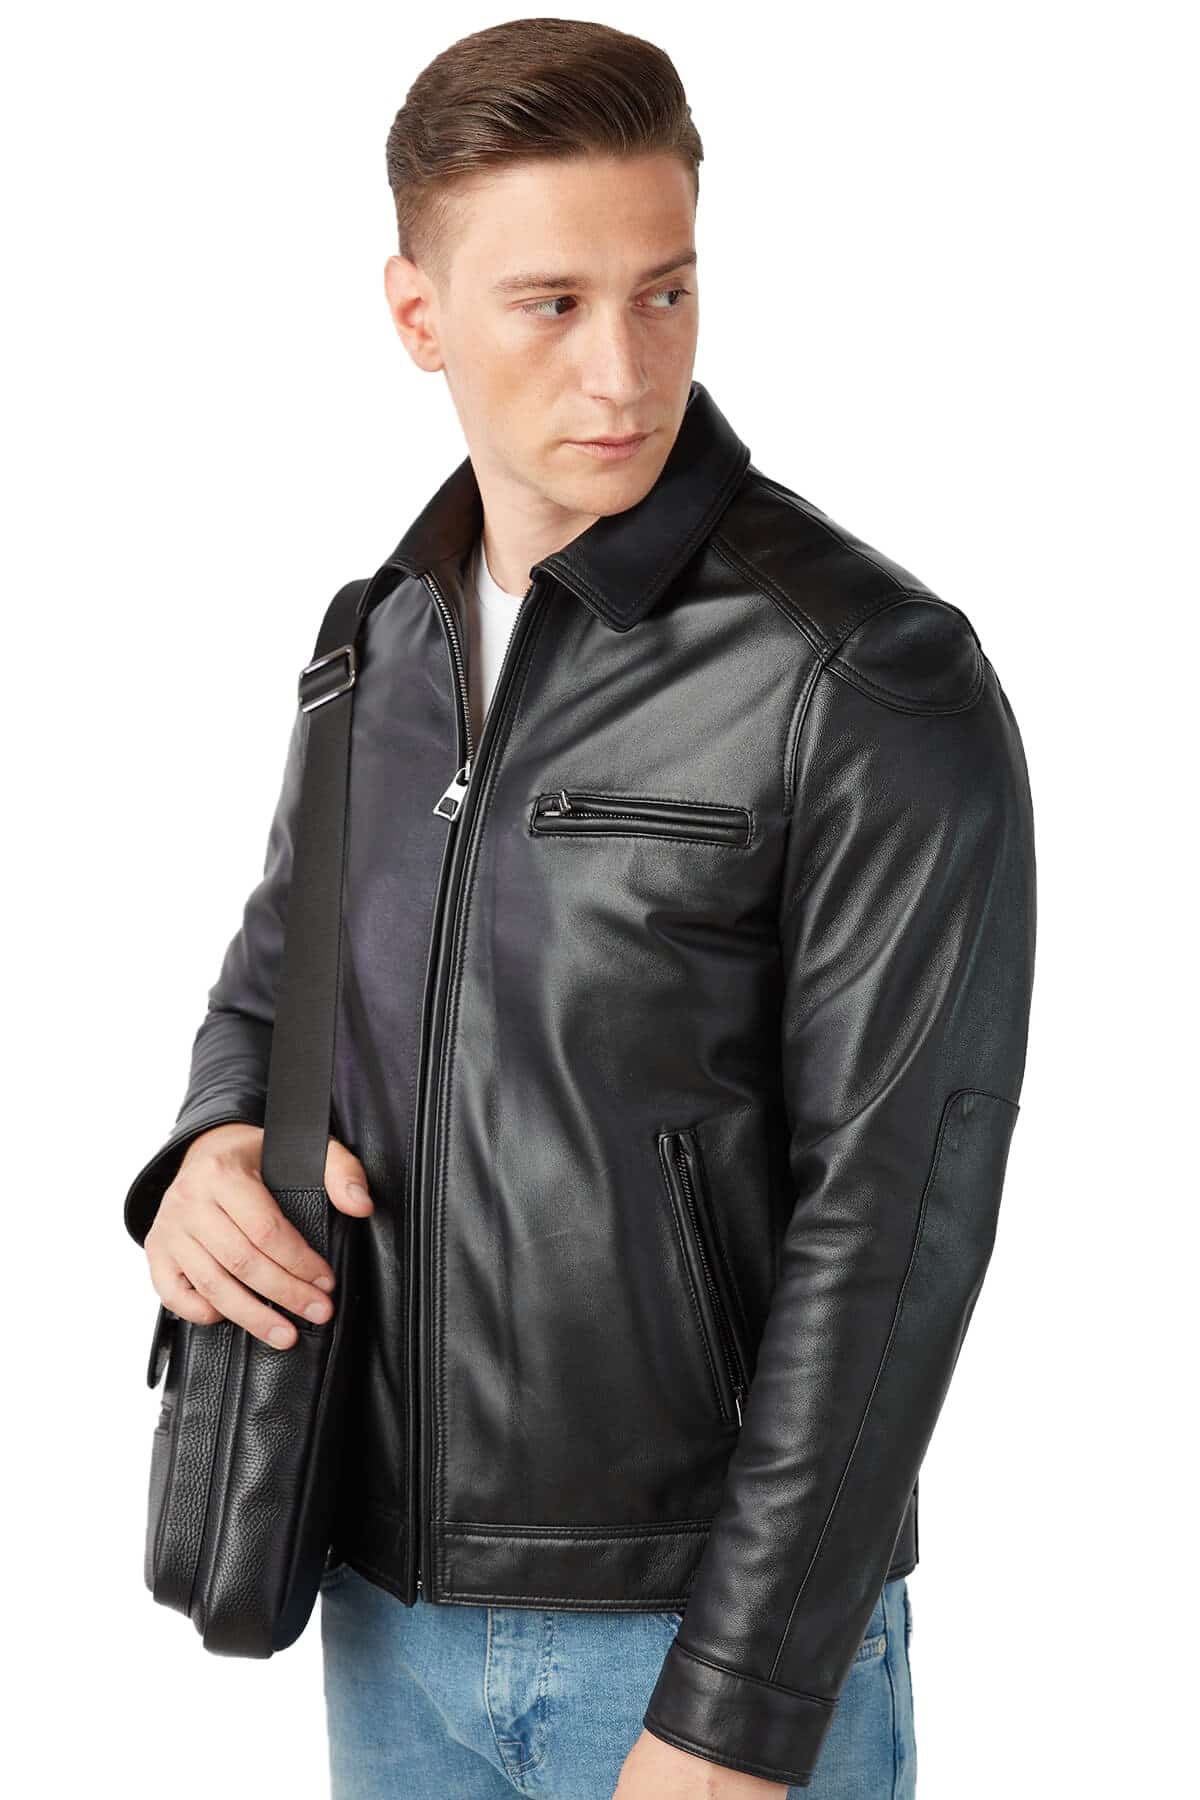 Santino Black Genuine Leather Men's Coat - Urban Fashion Studio